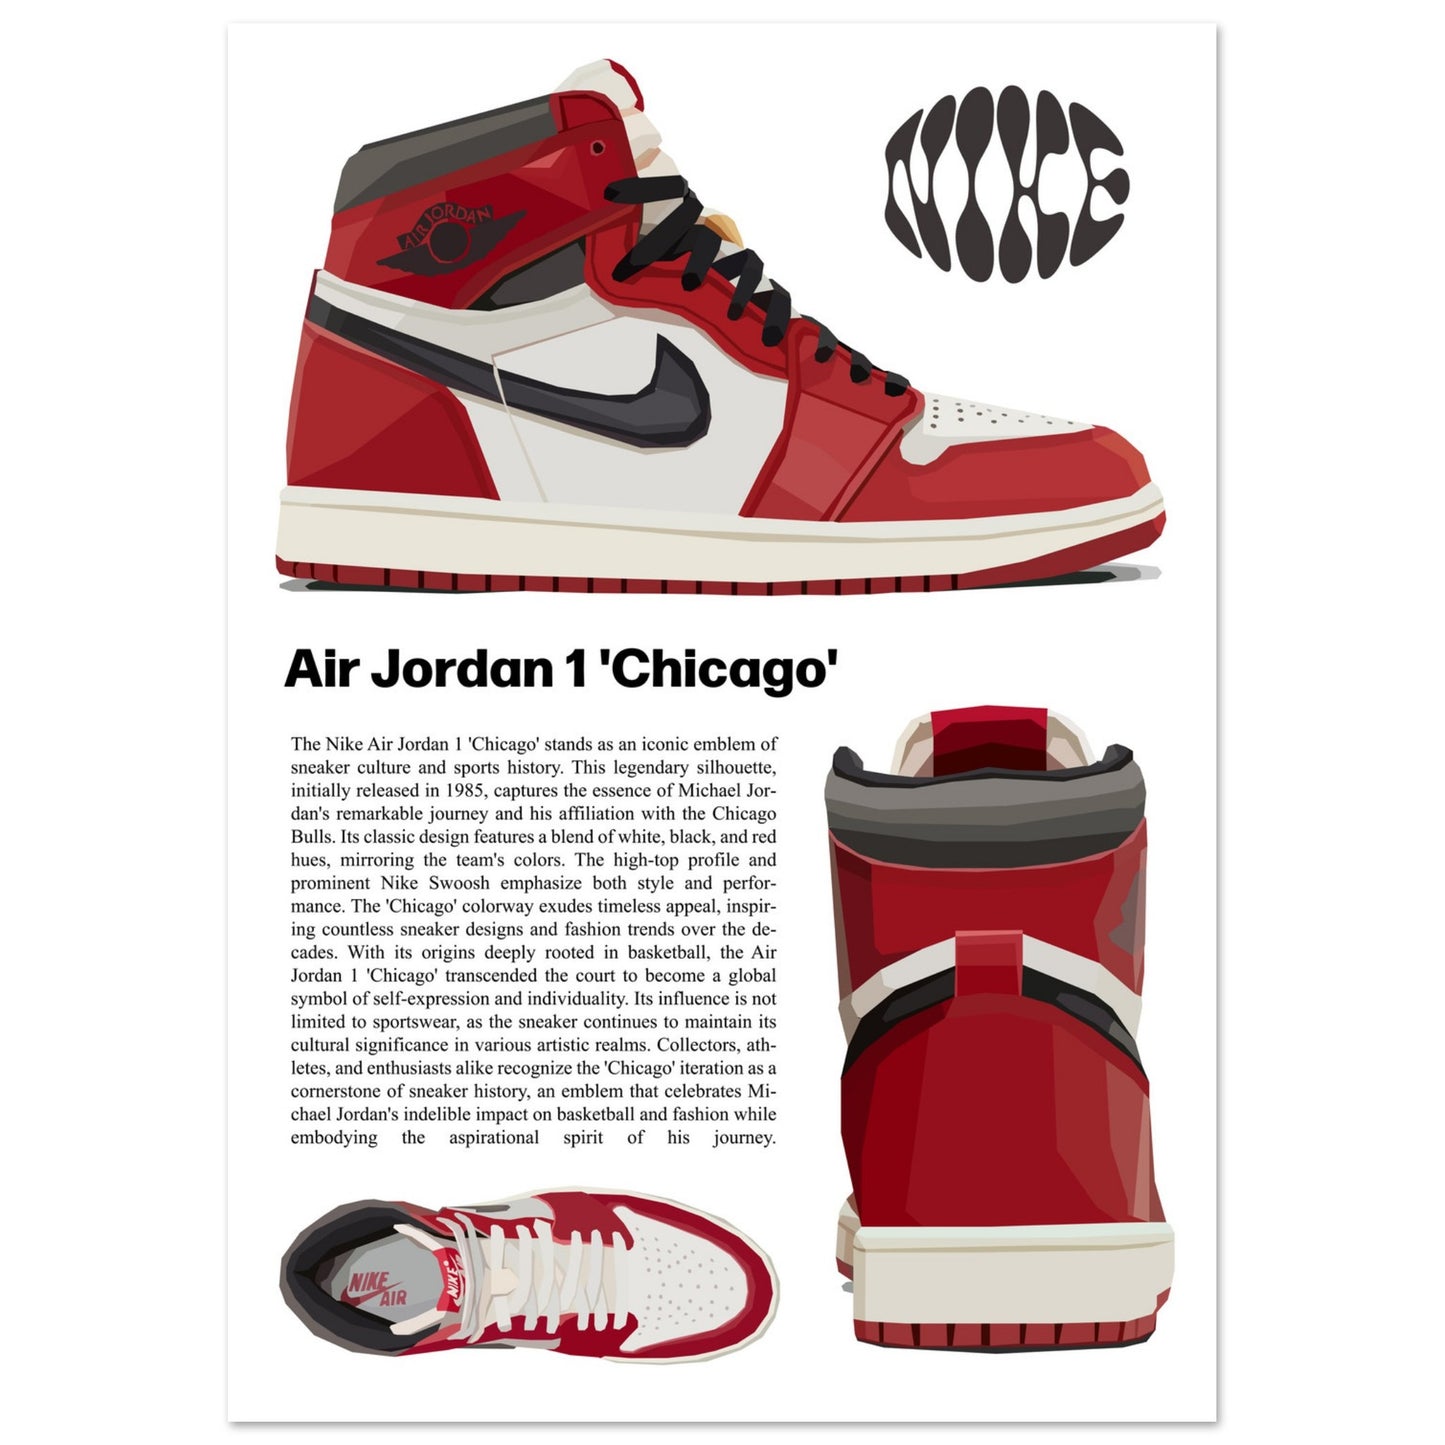 Air Jordan 1 'Chicago'